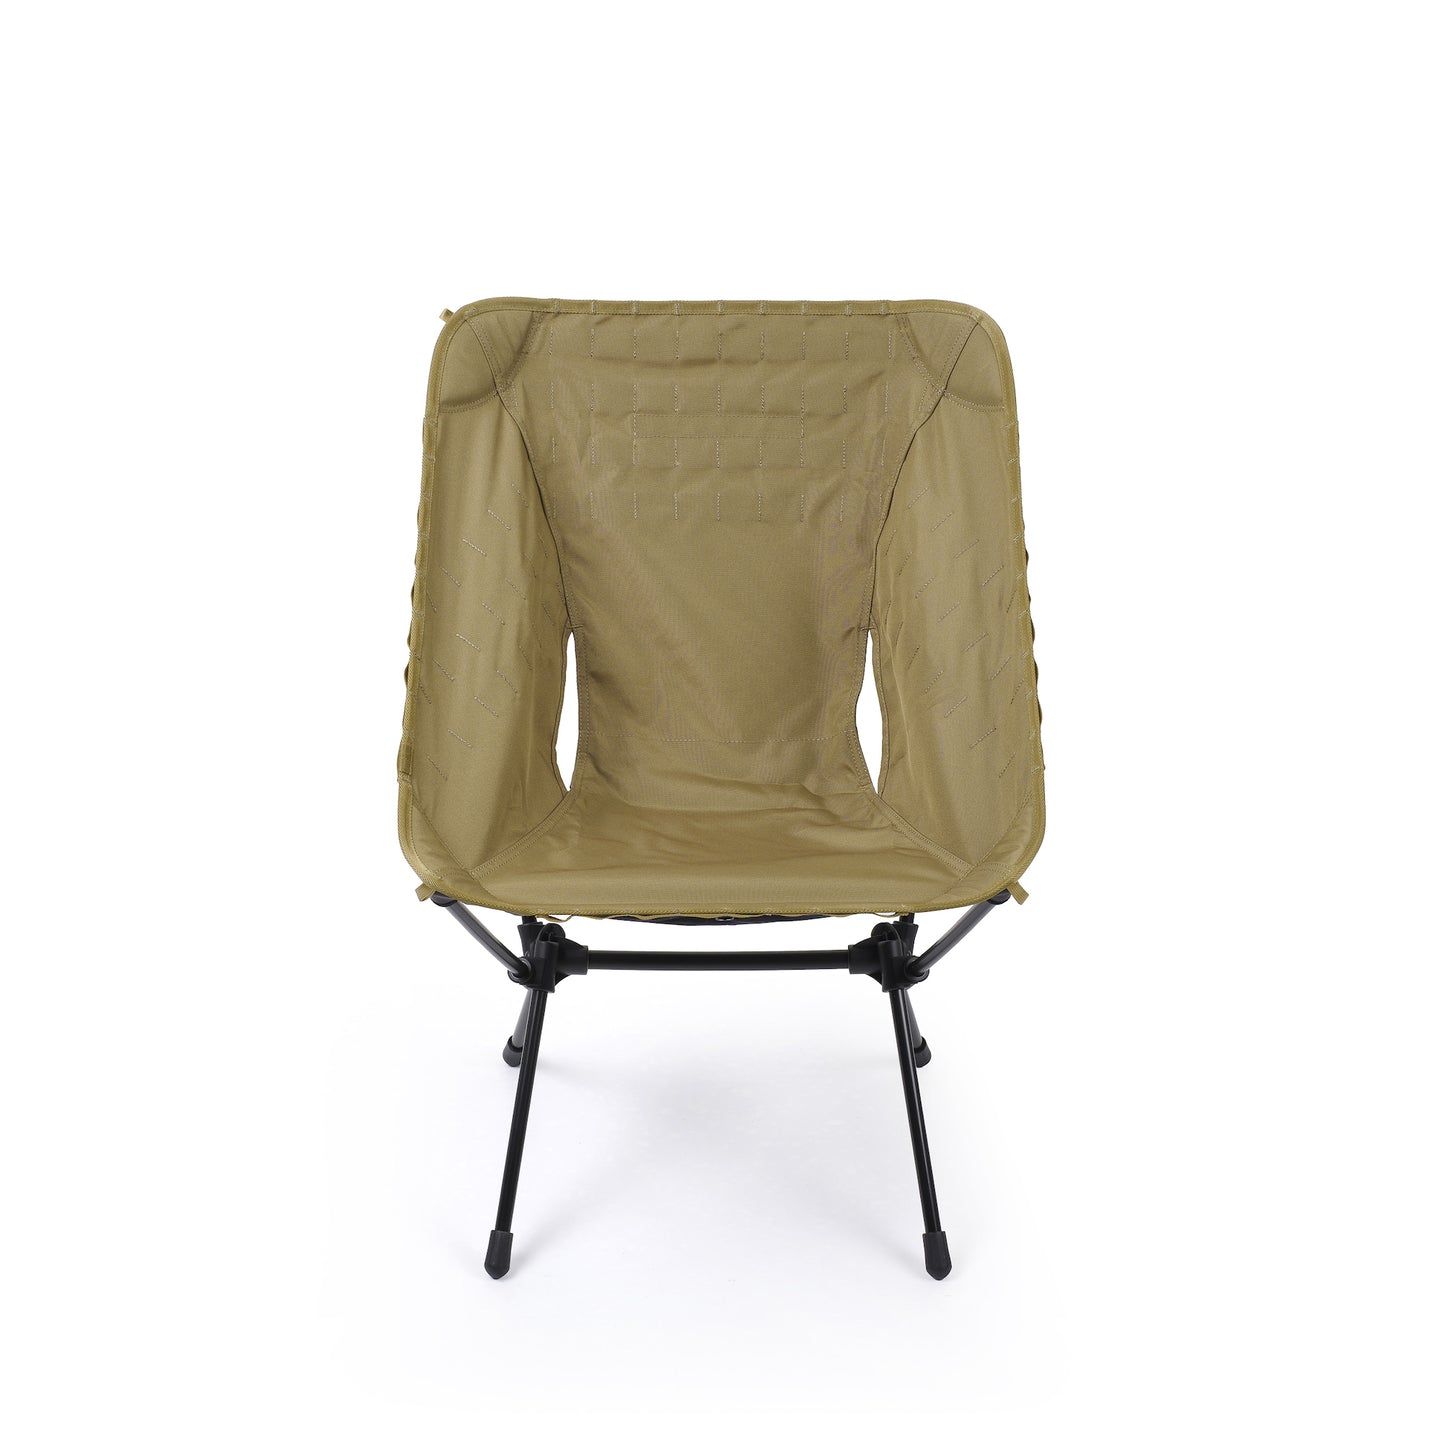 Tac. Chair Advanced Skin - Coyote Tan